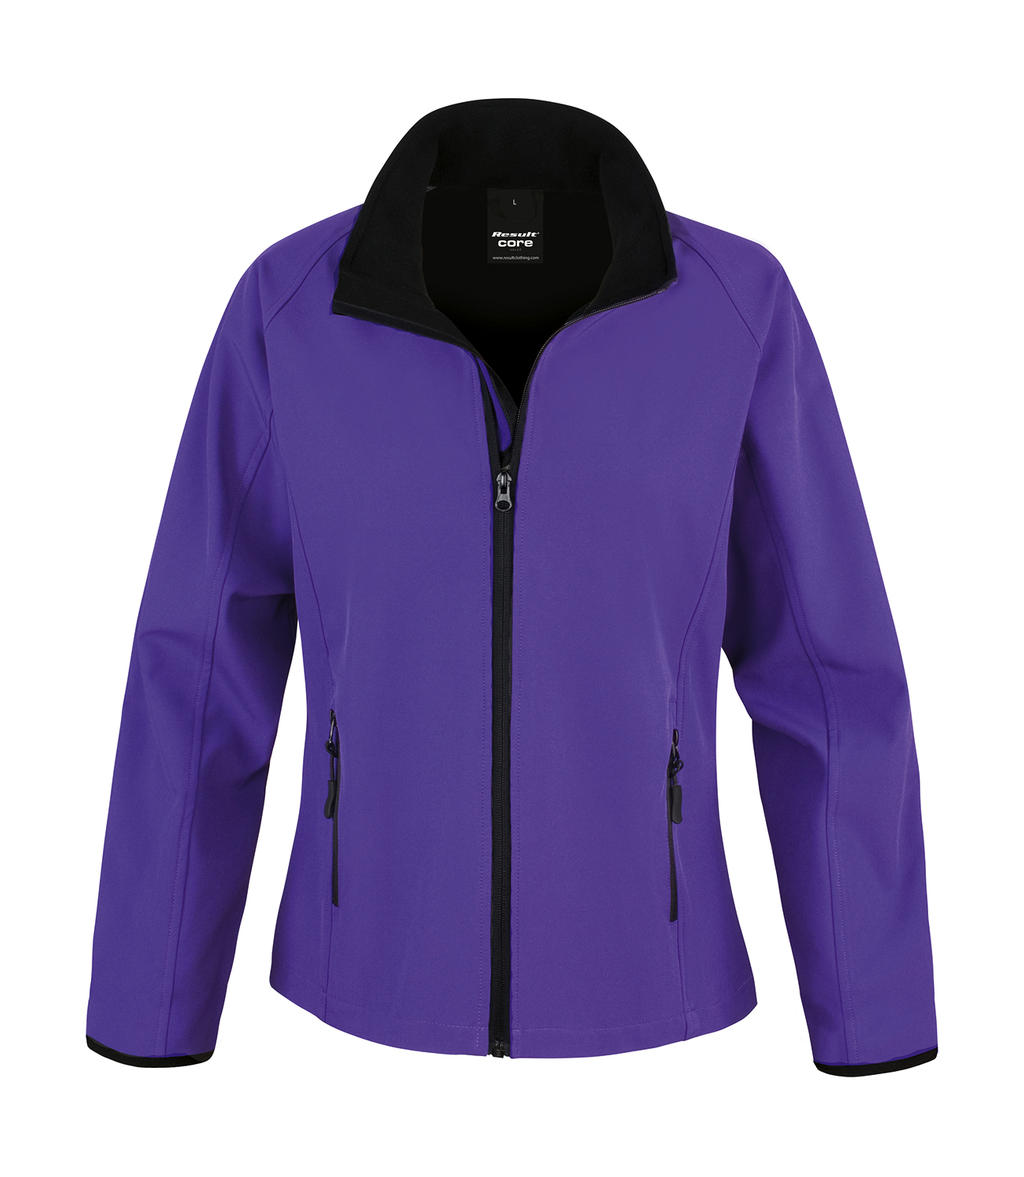  Ladies Printable Softshell Jacket in Farbe Purple/Black